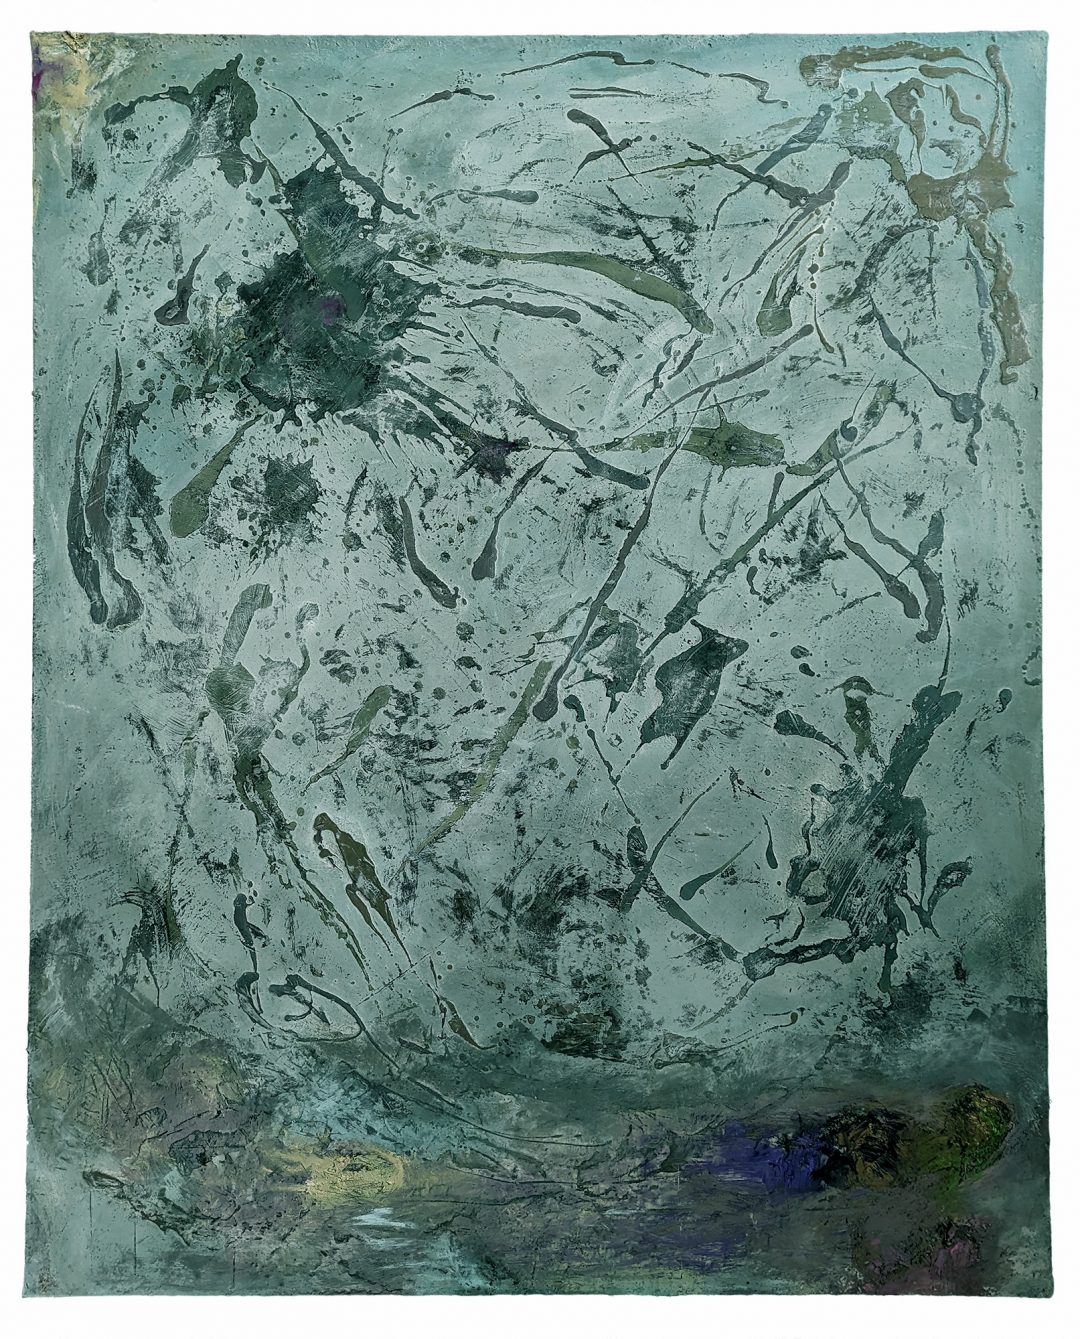 annemanoli-peintures2023-huilesurtoile -emulsion-cire-164cmx131cm